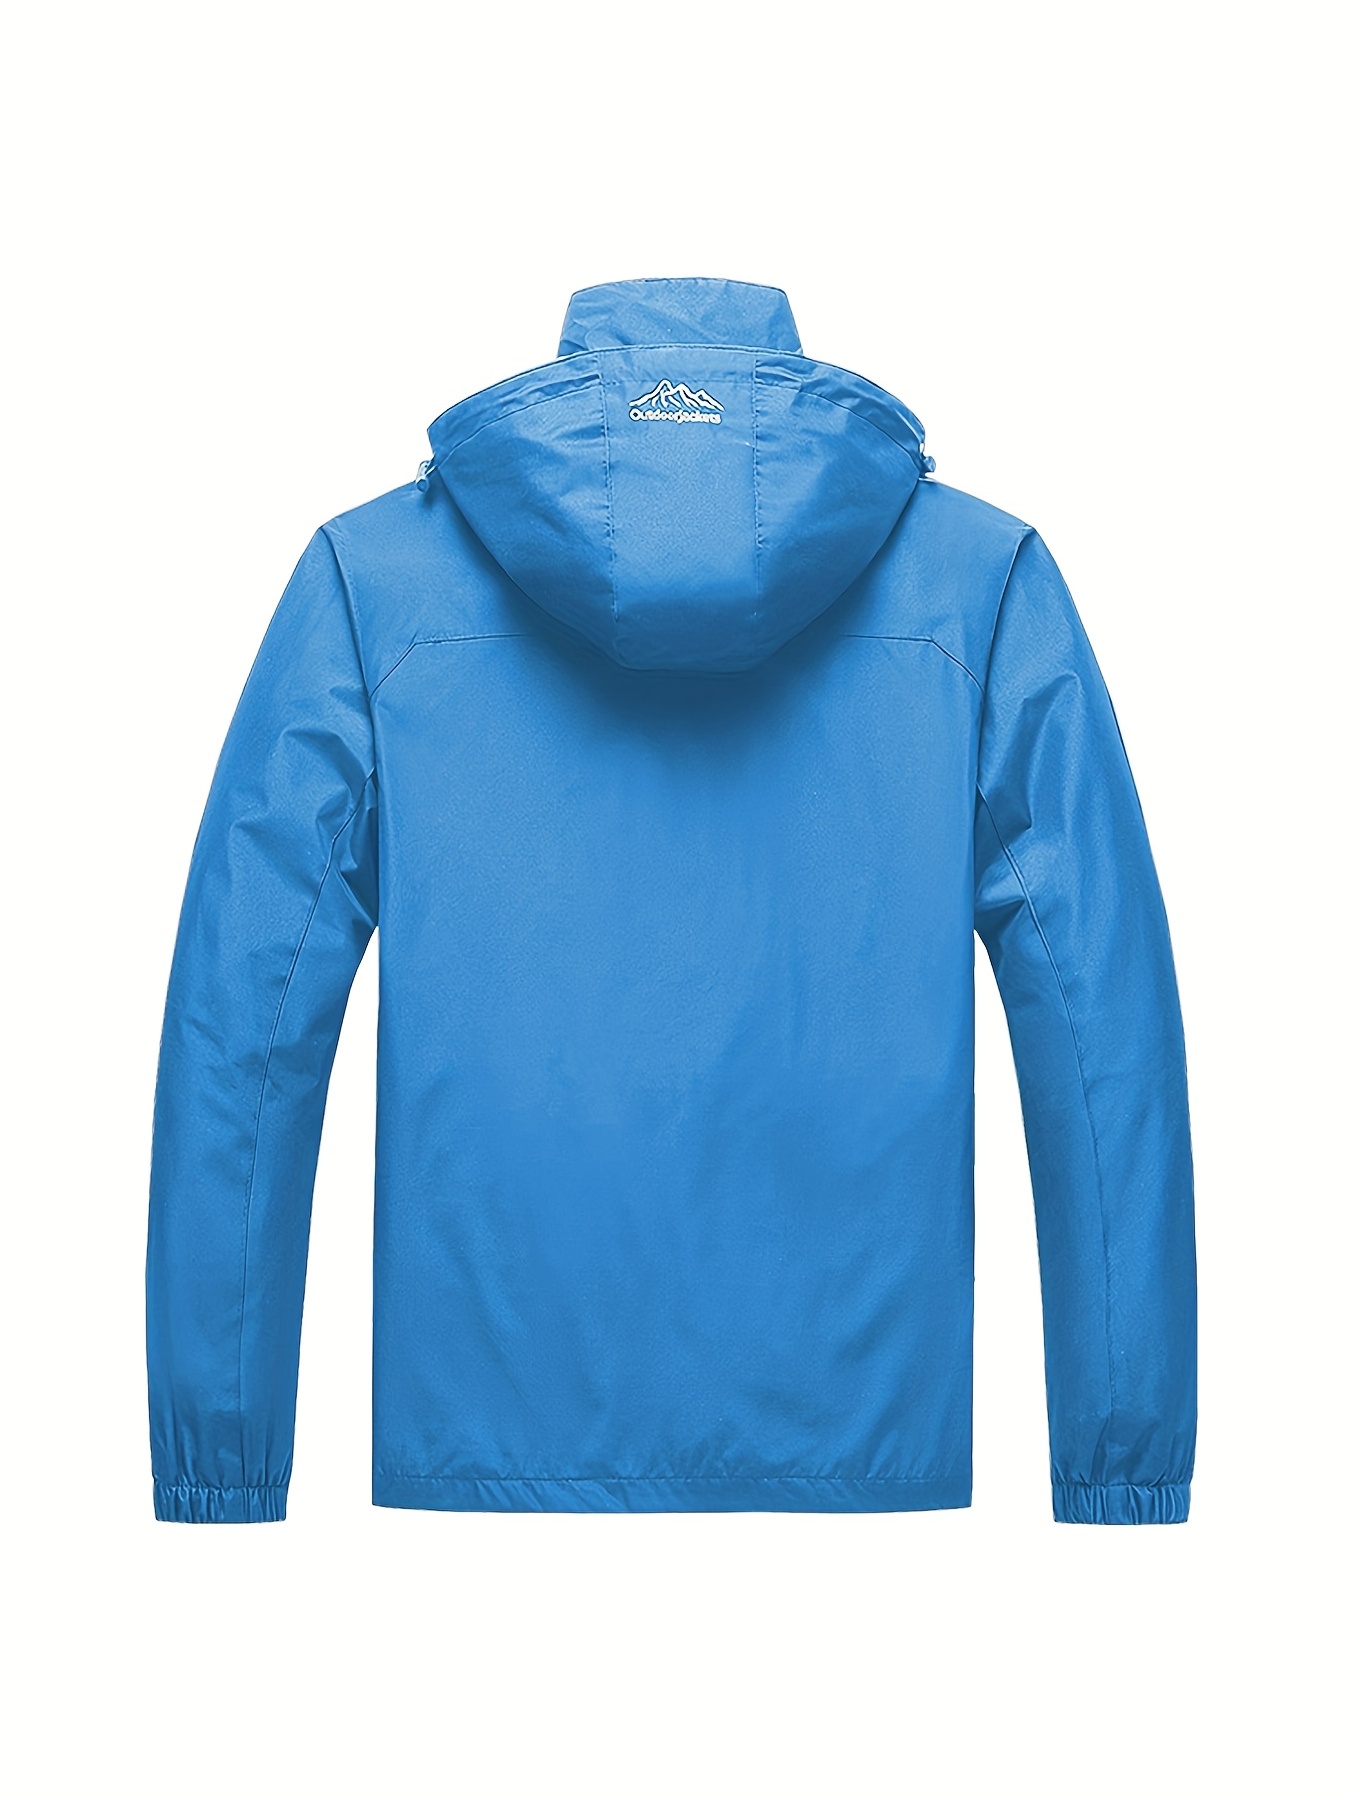 mens waterproof rain jacket lightweight raincoat windbreaker with hood for hiking travel outdoor details 16